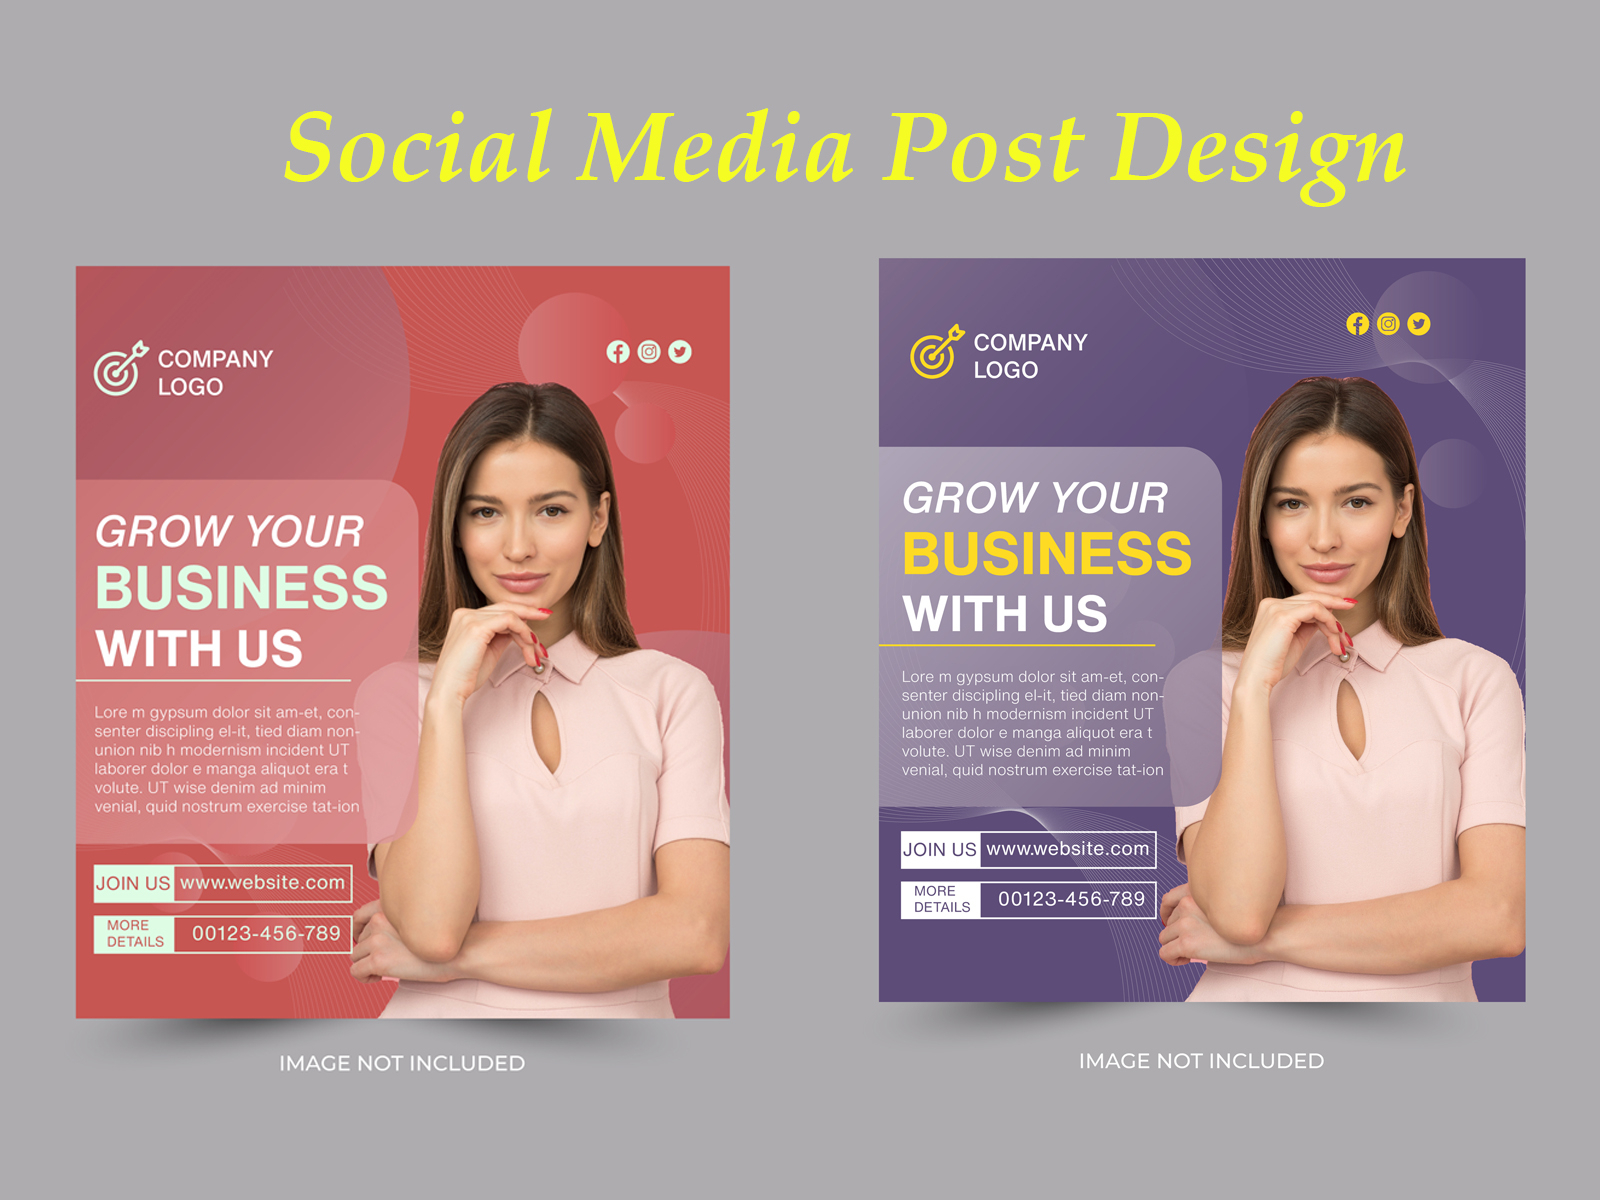 Marketing Social Media Post Design by Md Asikur Rahman on Dribbble